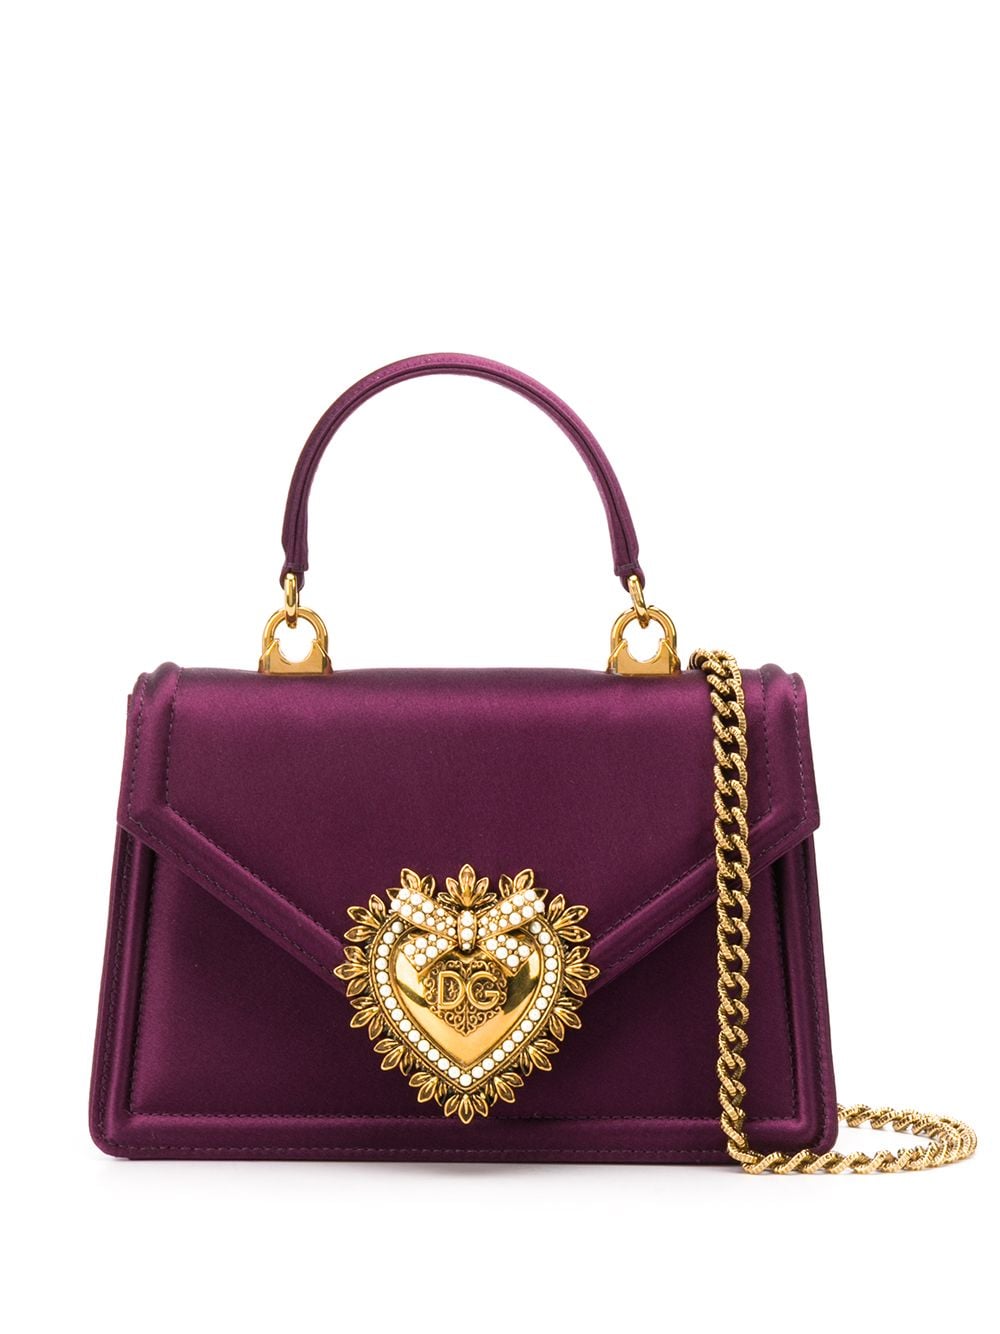 Dolce \u0026 Gabbana DG Amore mini bag 